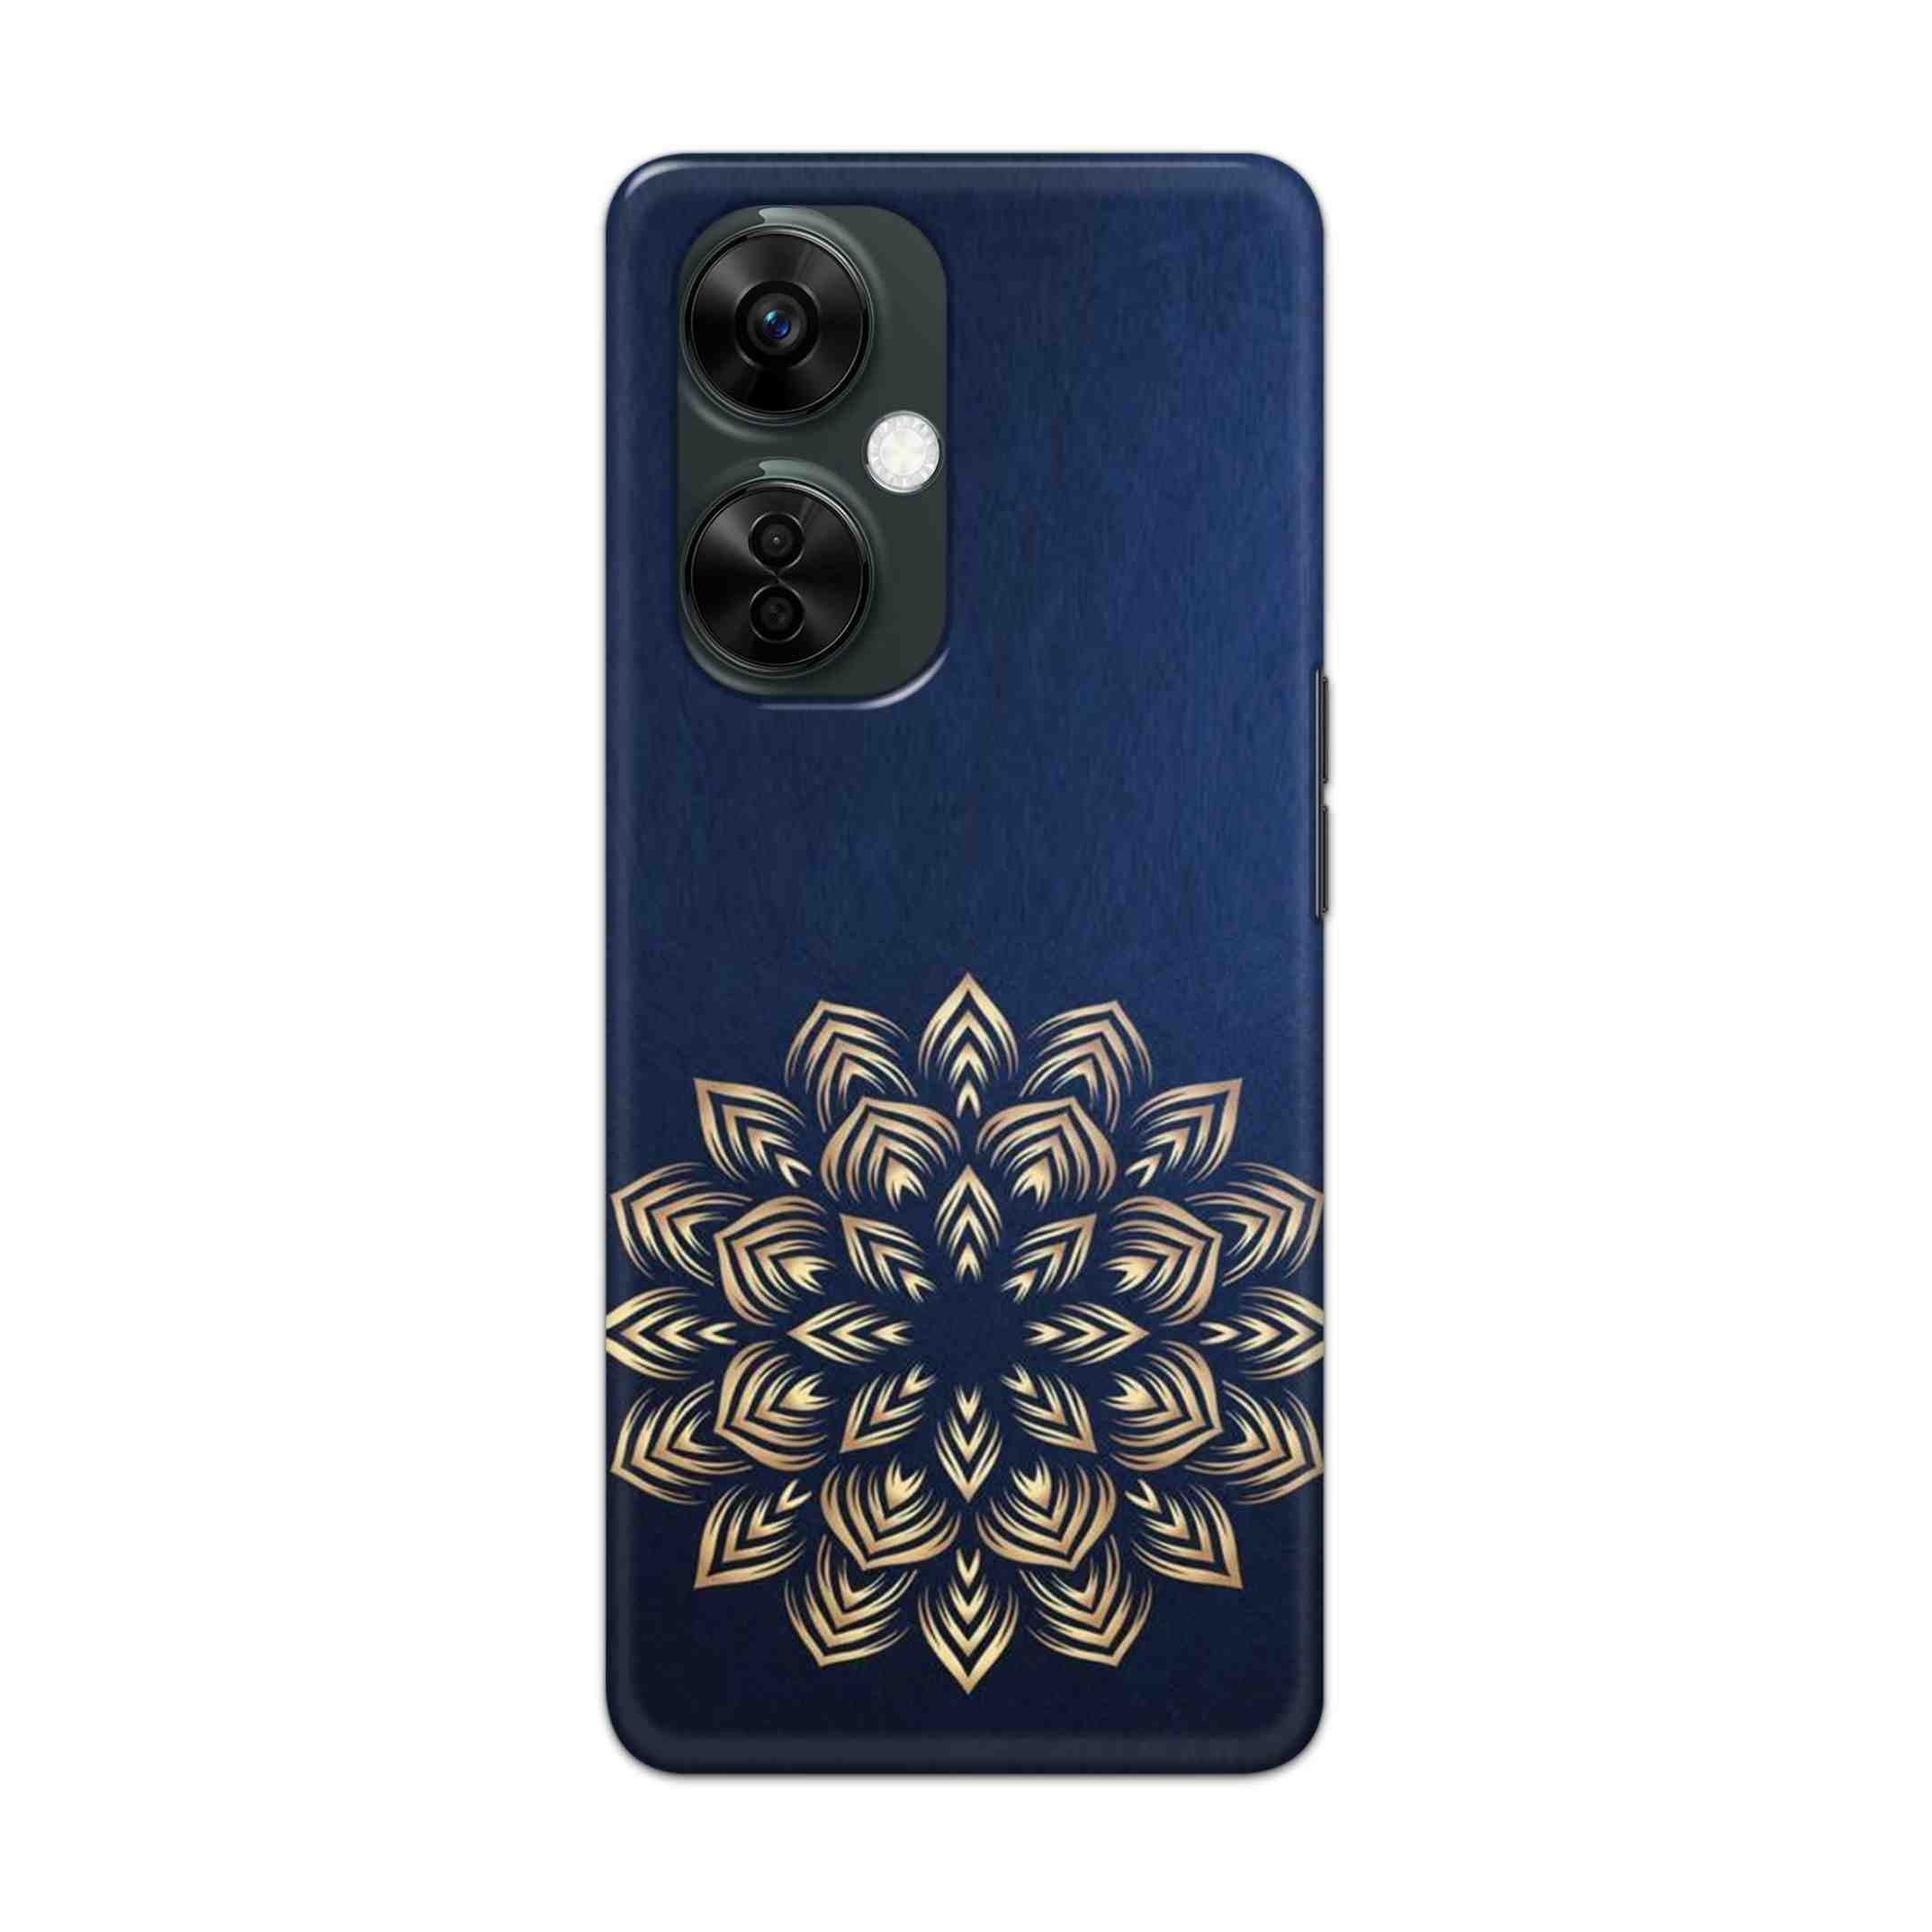 Buy Heart Mandala Hard Back Mobile Phone Case Cover For Oneplus Nord CE 3 Lite Online